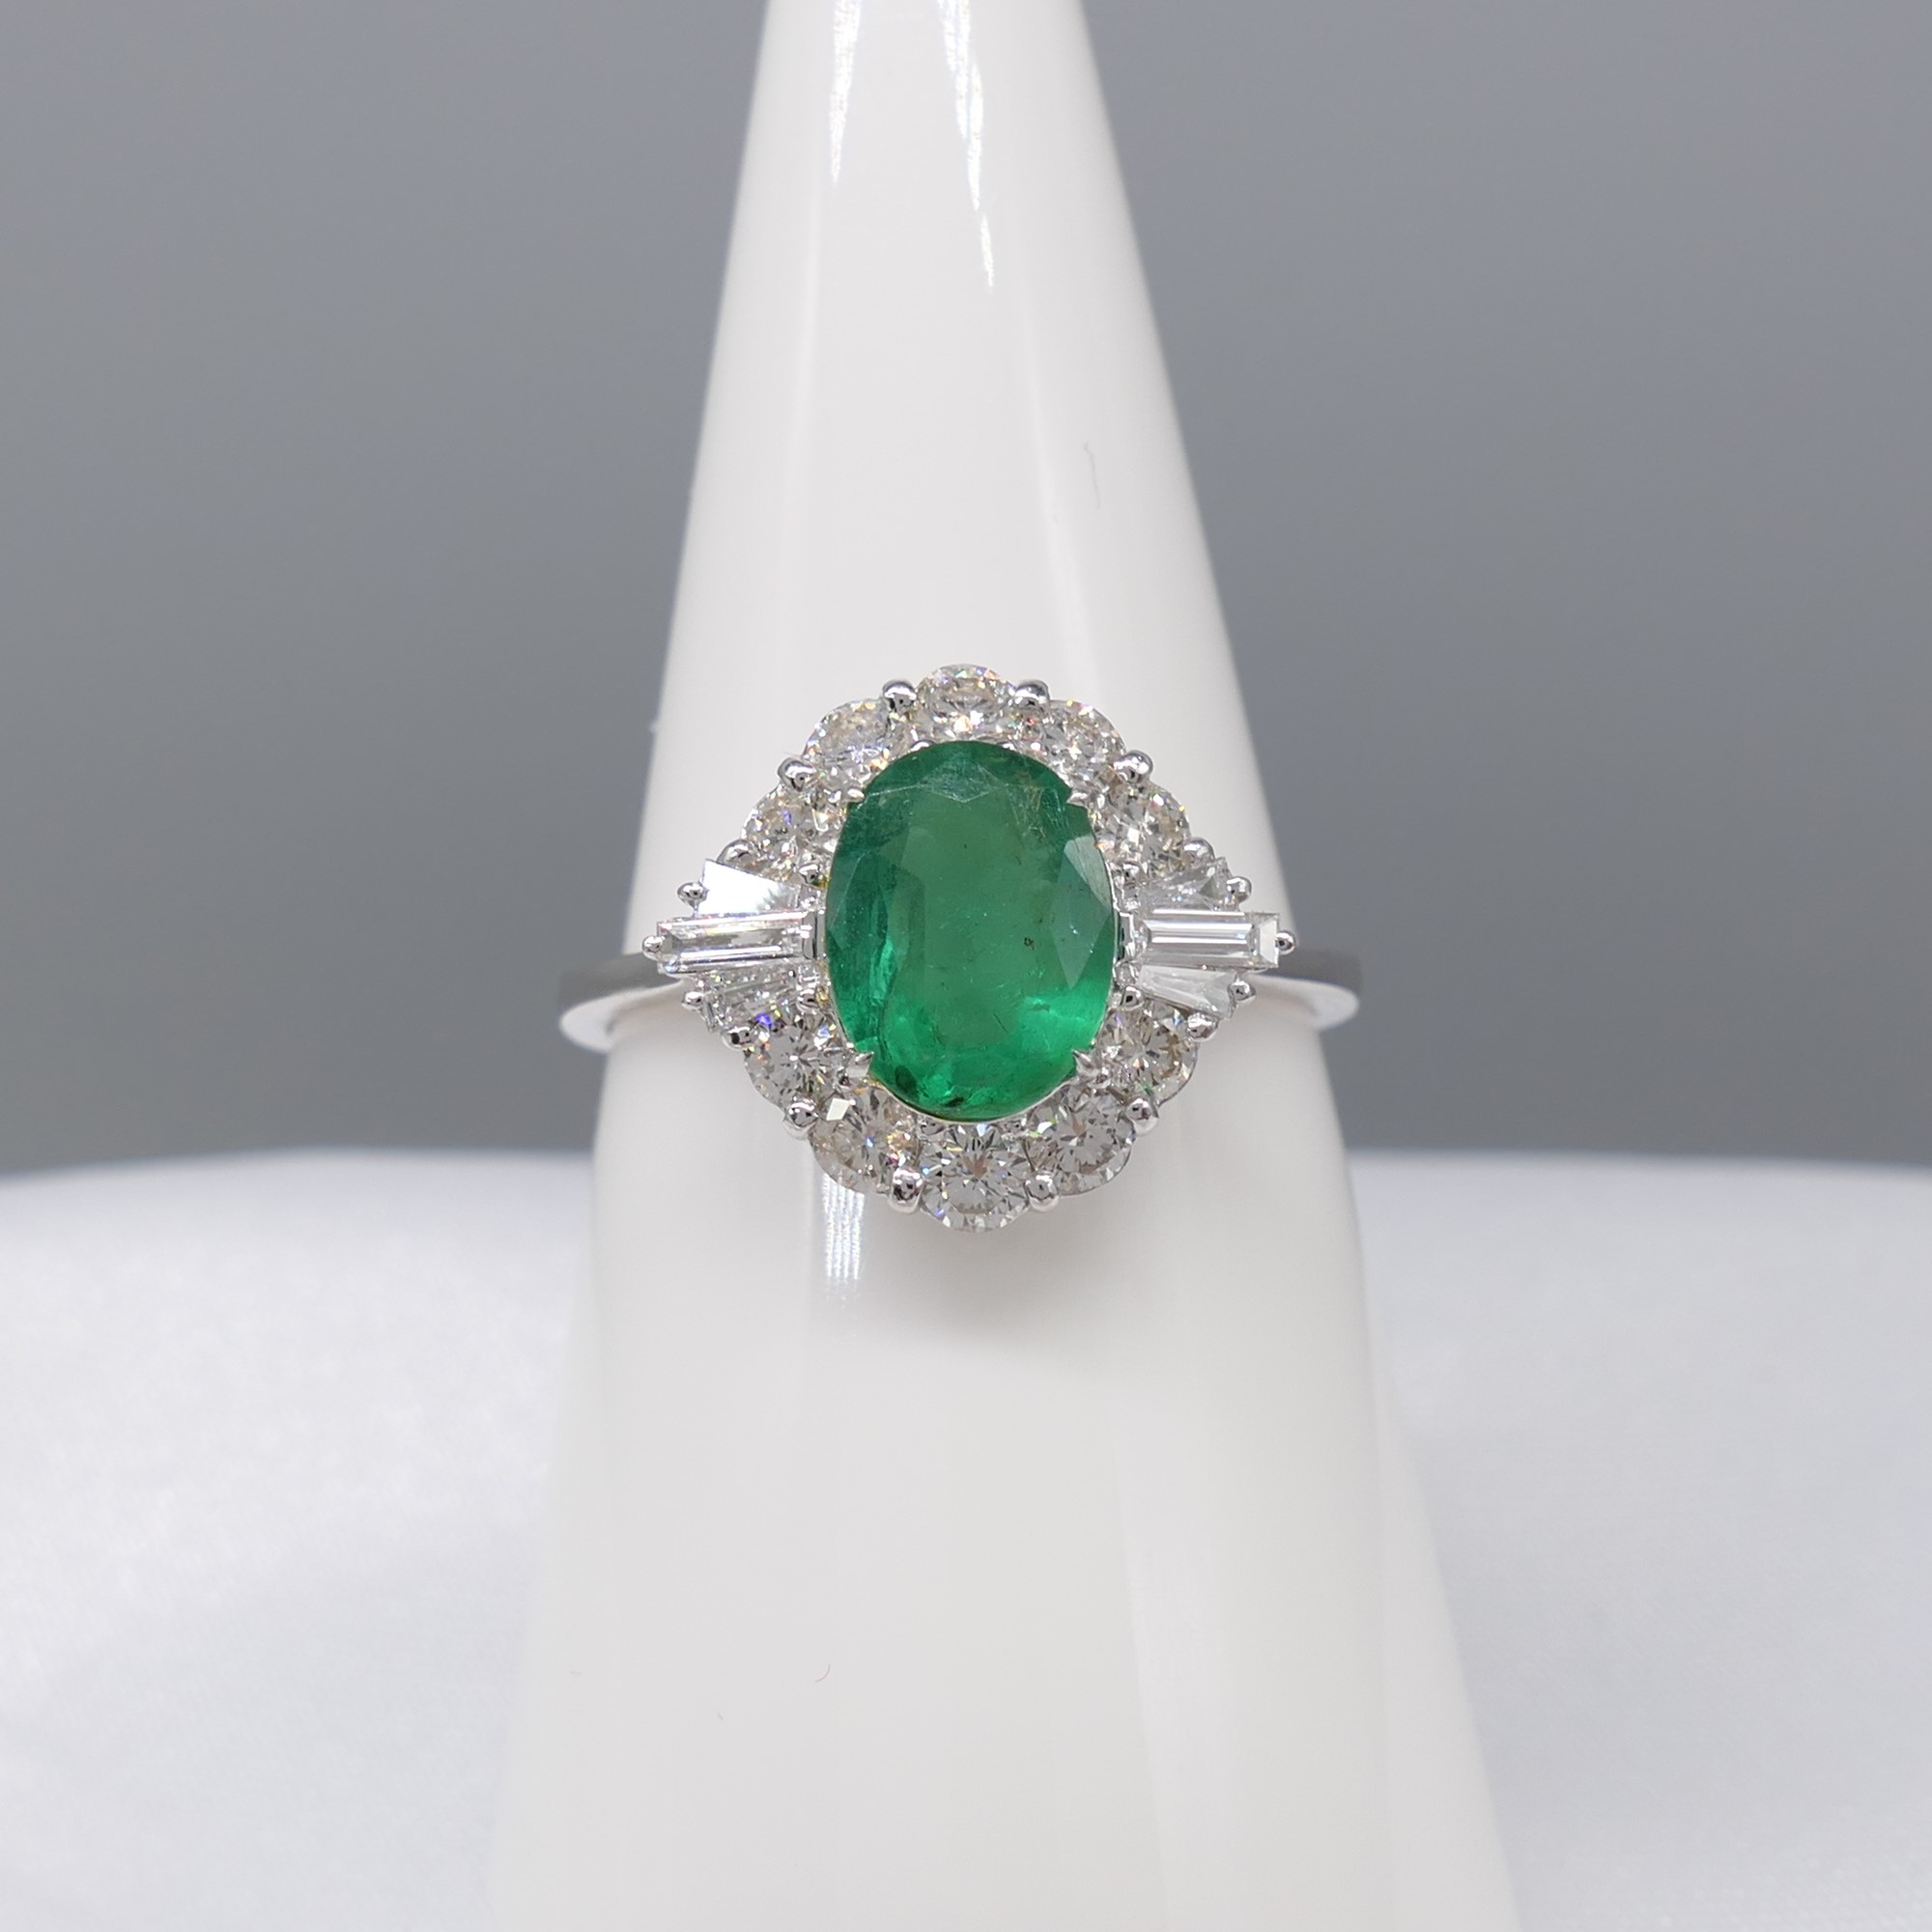 Stylish 1.05 carat emerald and diamond dress ring - Image 4 of 8